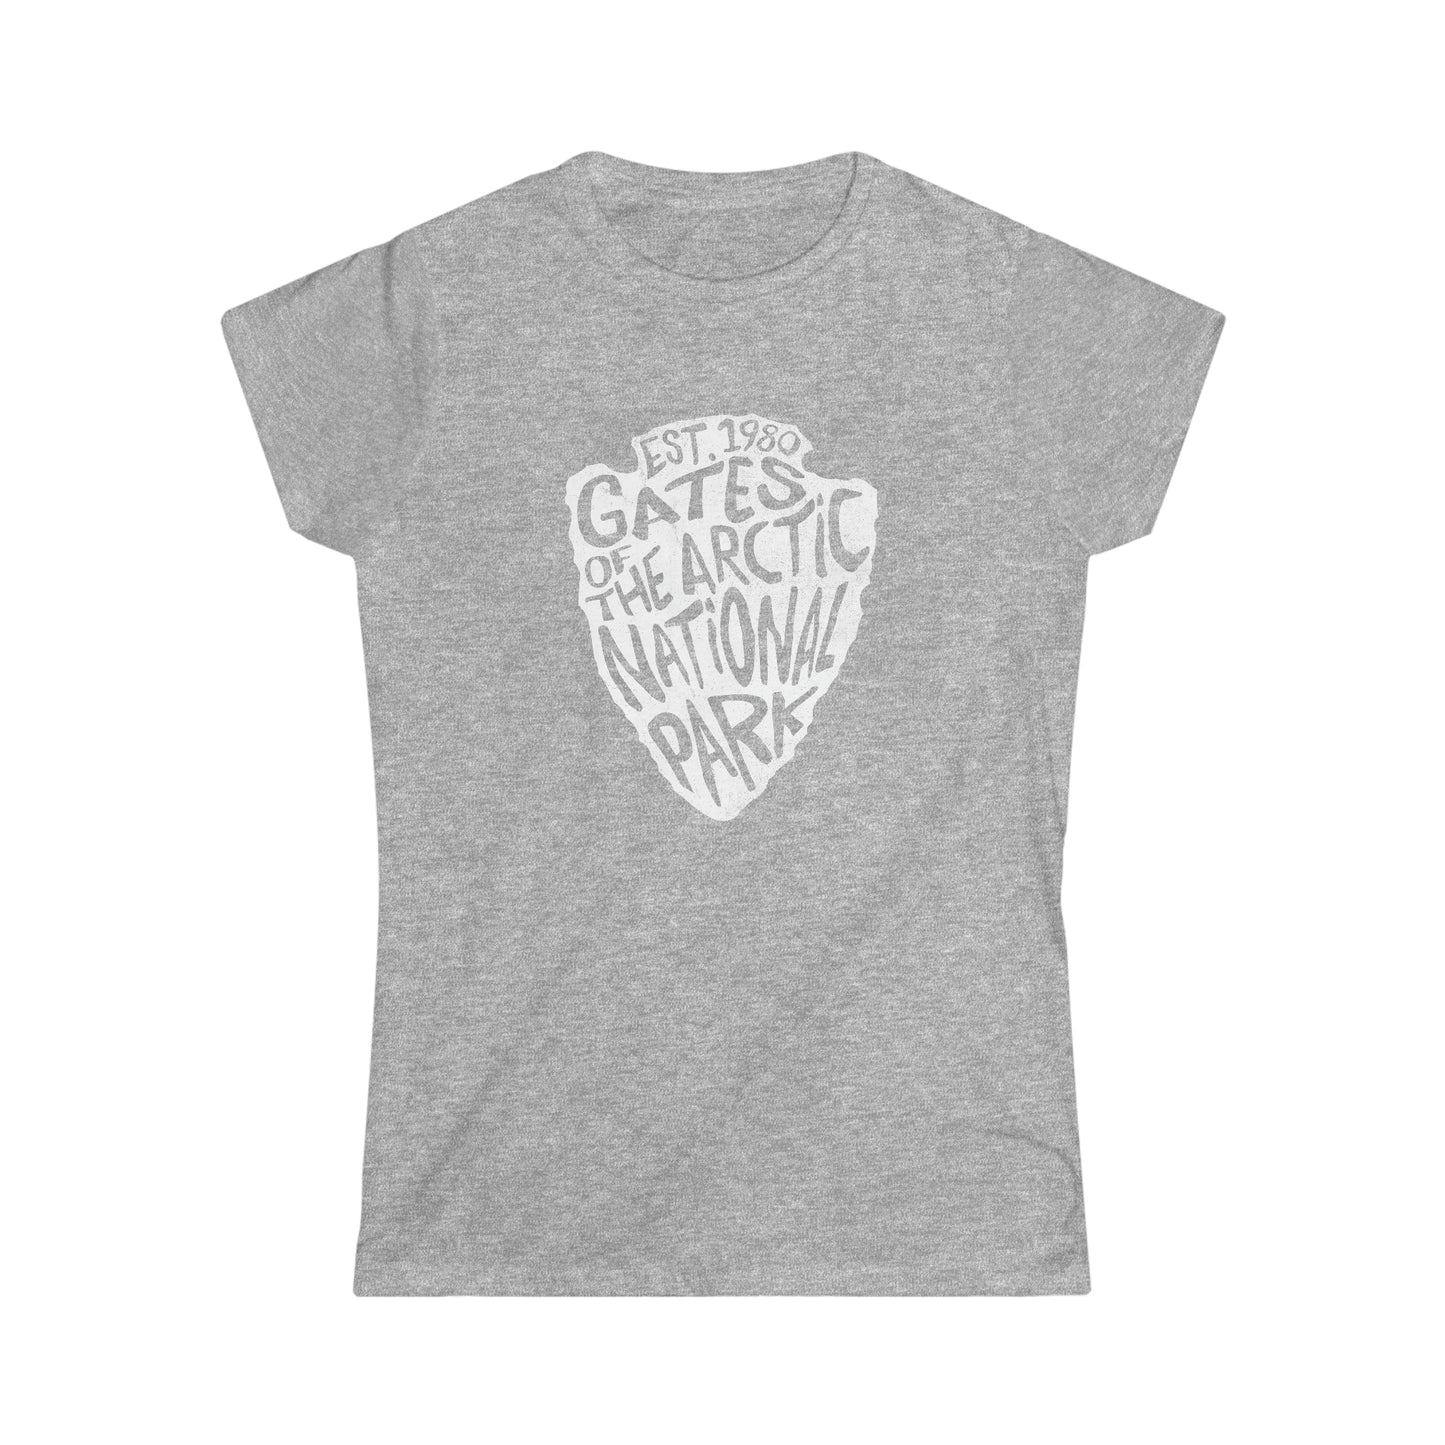 Gates of the Arctic National Park Women's T-Shirt - Arrowhead Design